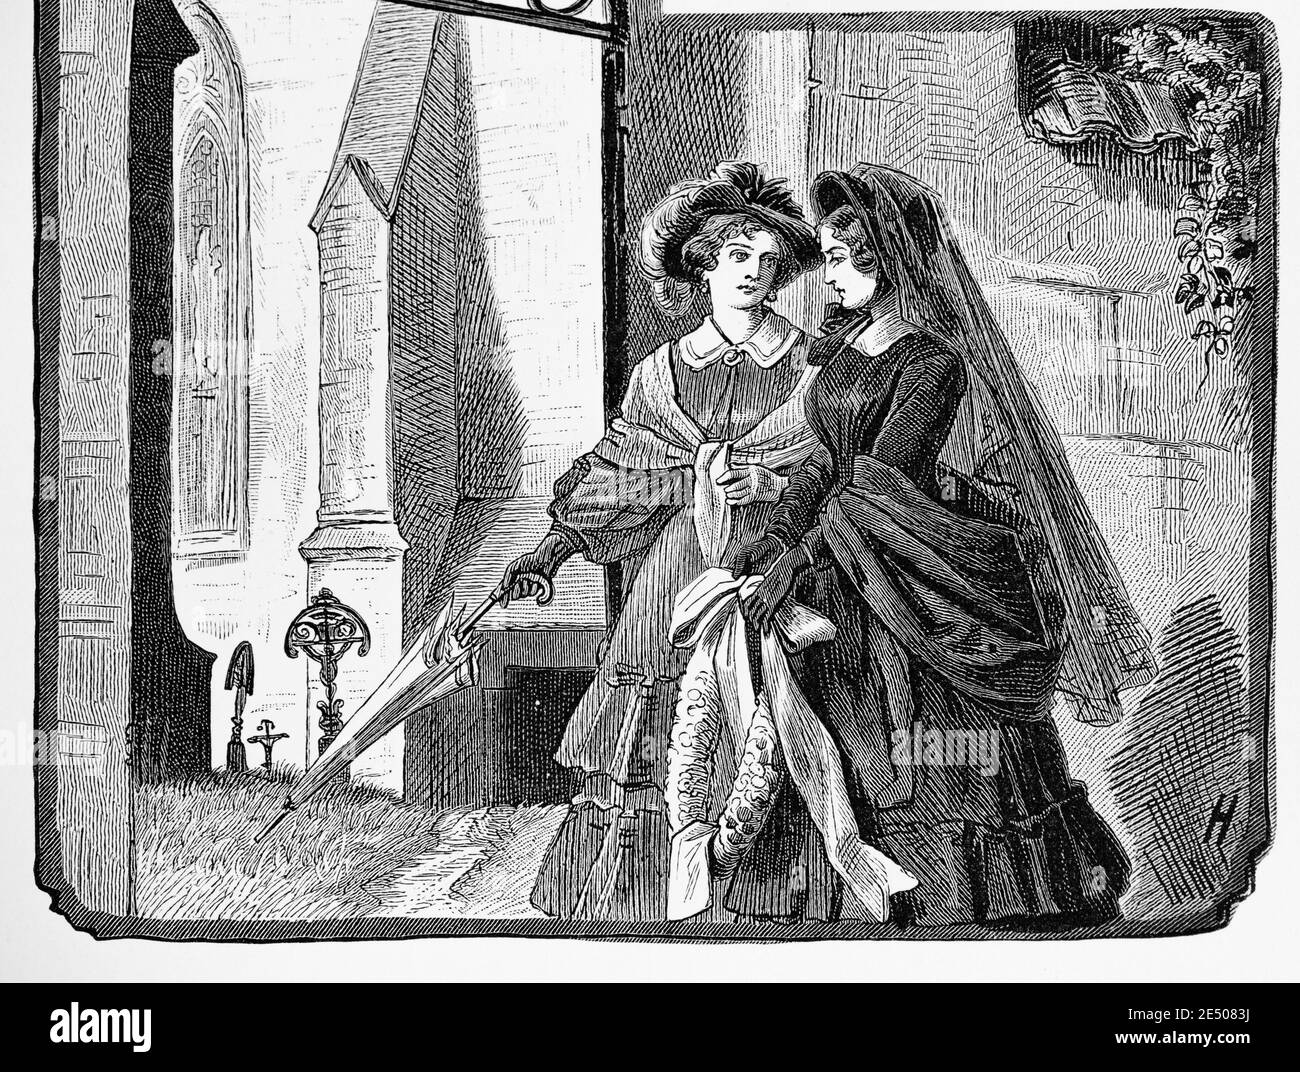 Illustration to Heine´s poem Gedächtniszfeier about two women meeting again, German writer and poet Heinrich Heine, poem collection Romancero, 1880 Stock Photo